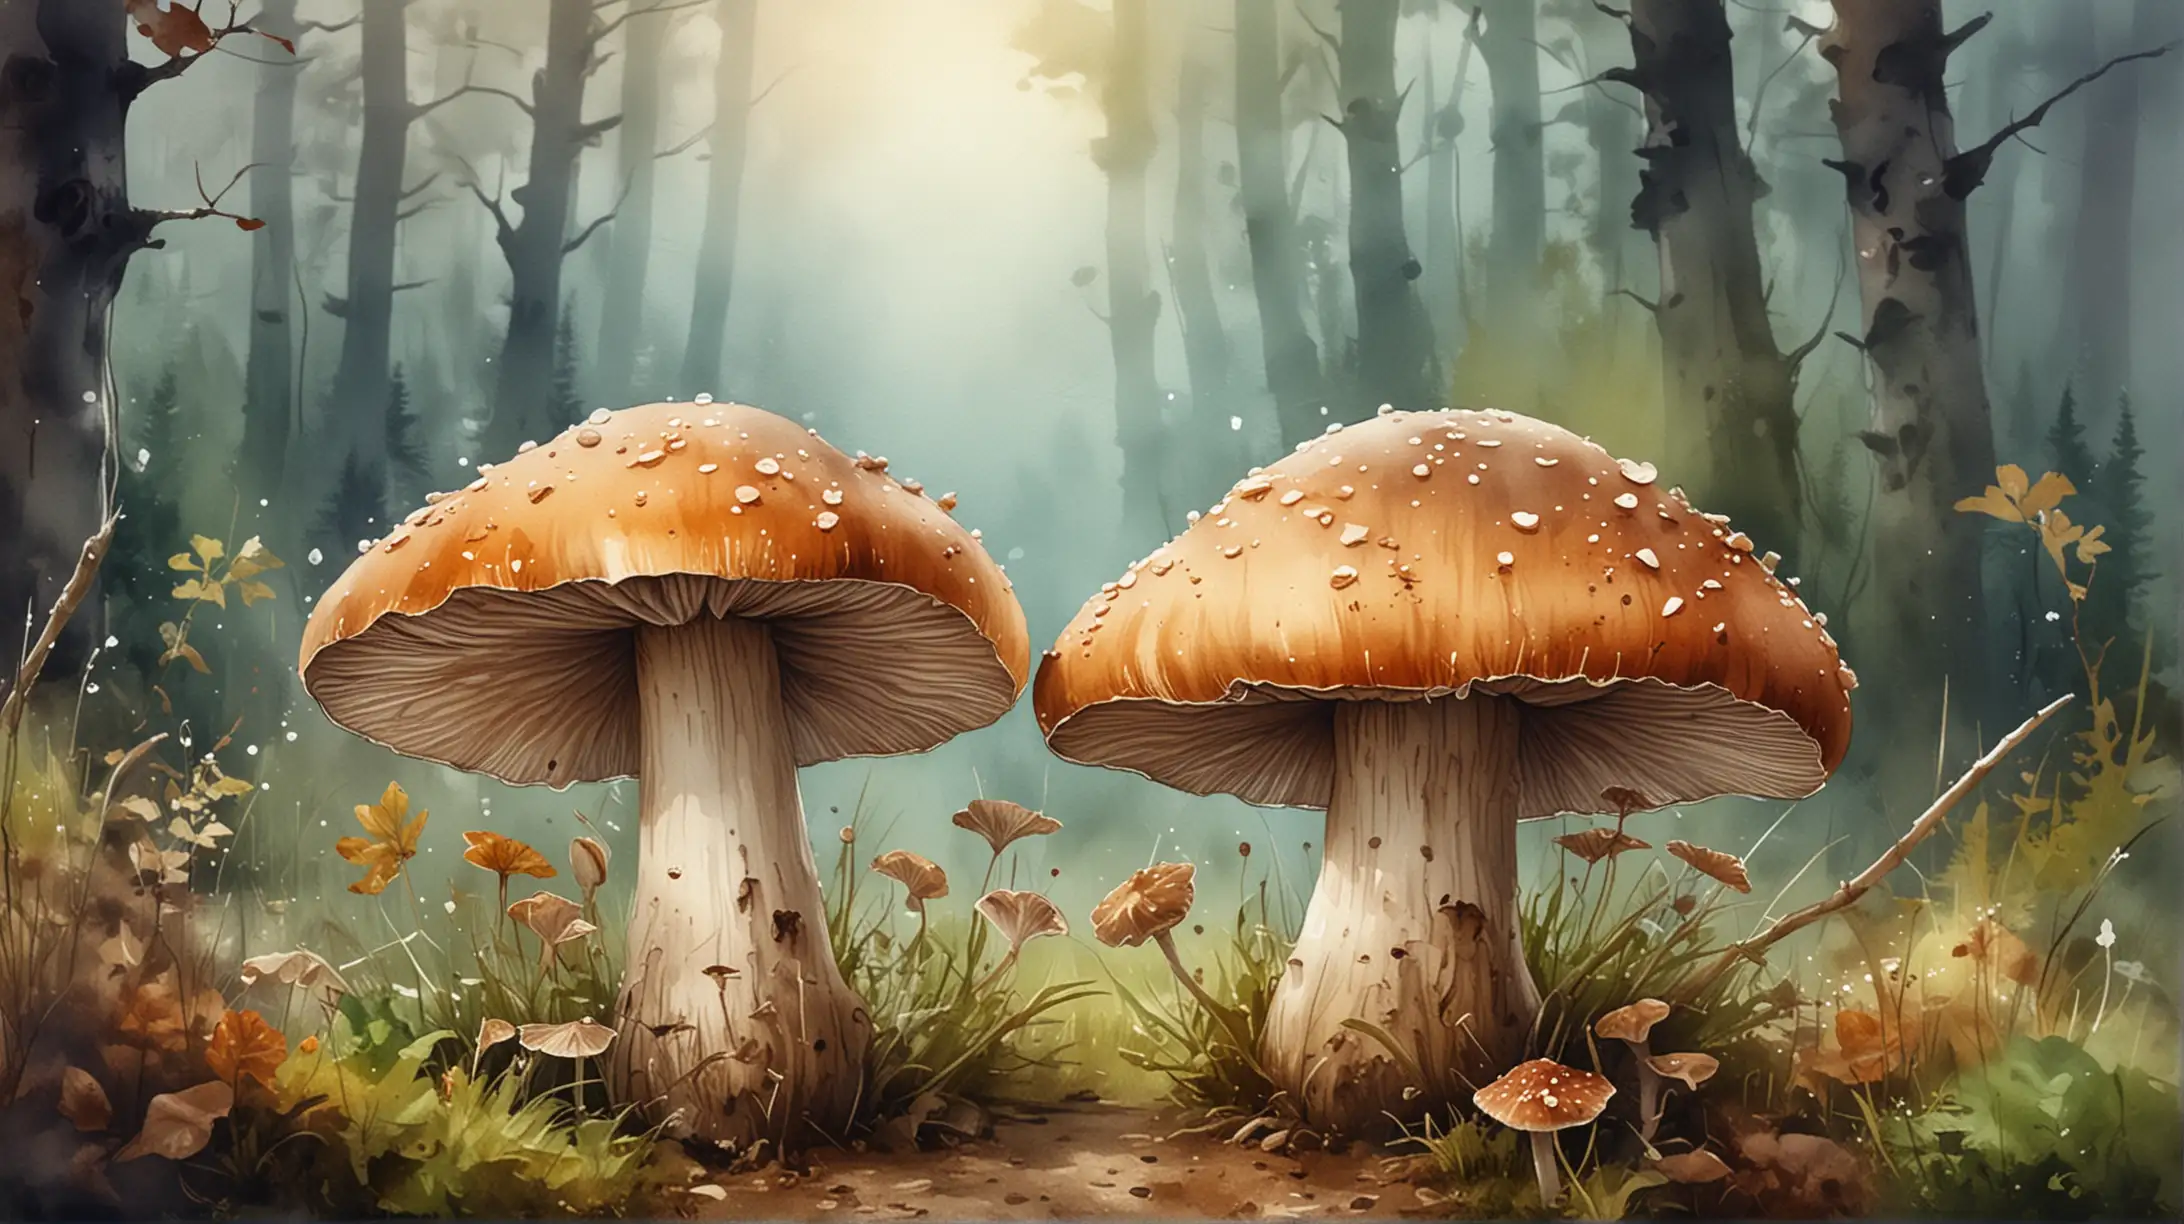 Enchanting Watercolor Painting of a Mushroom